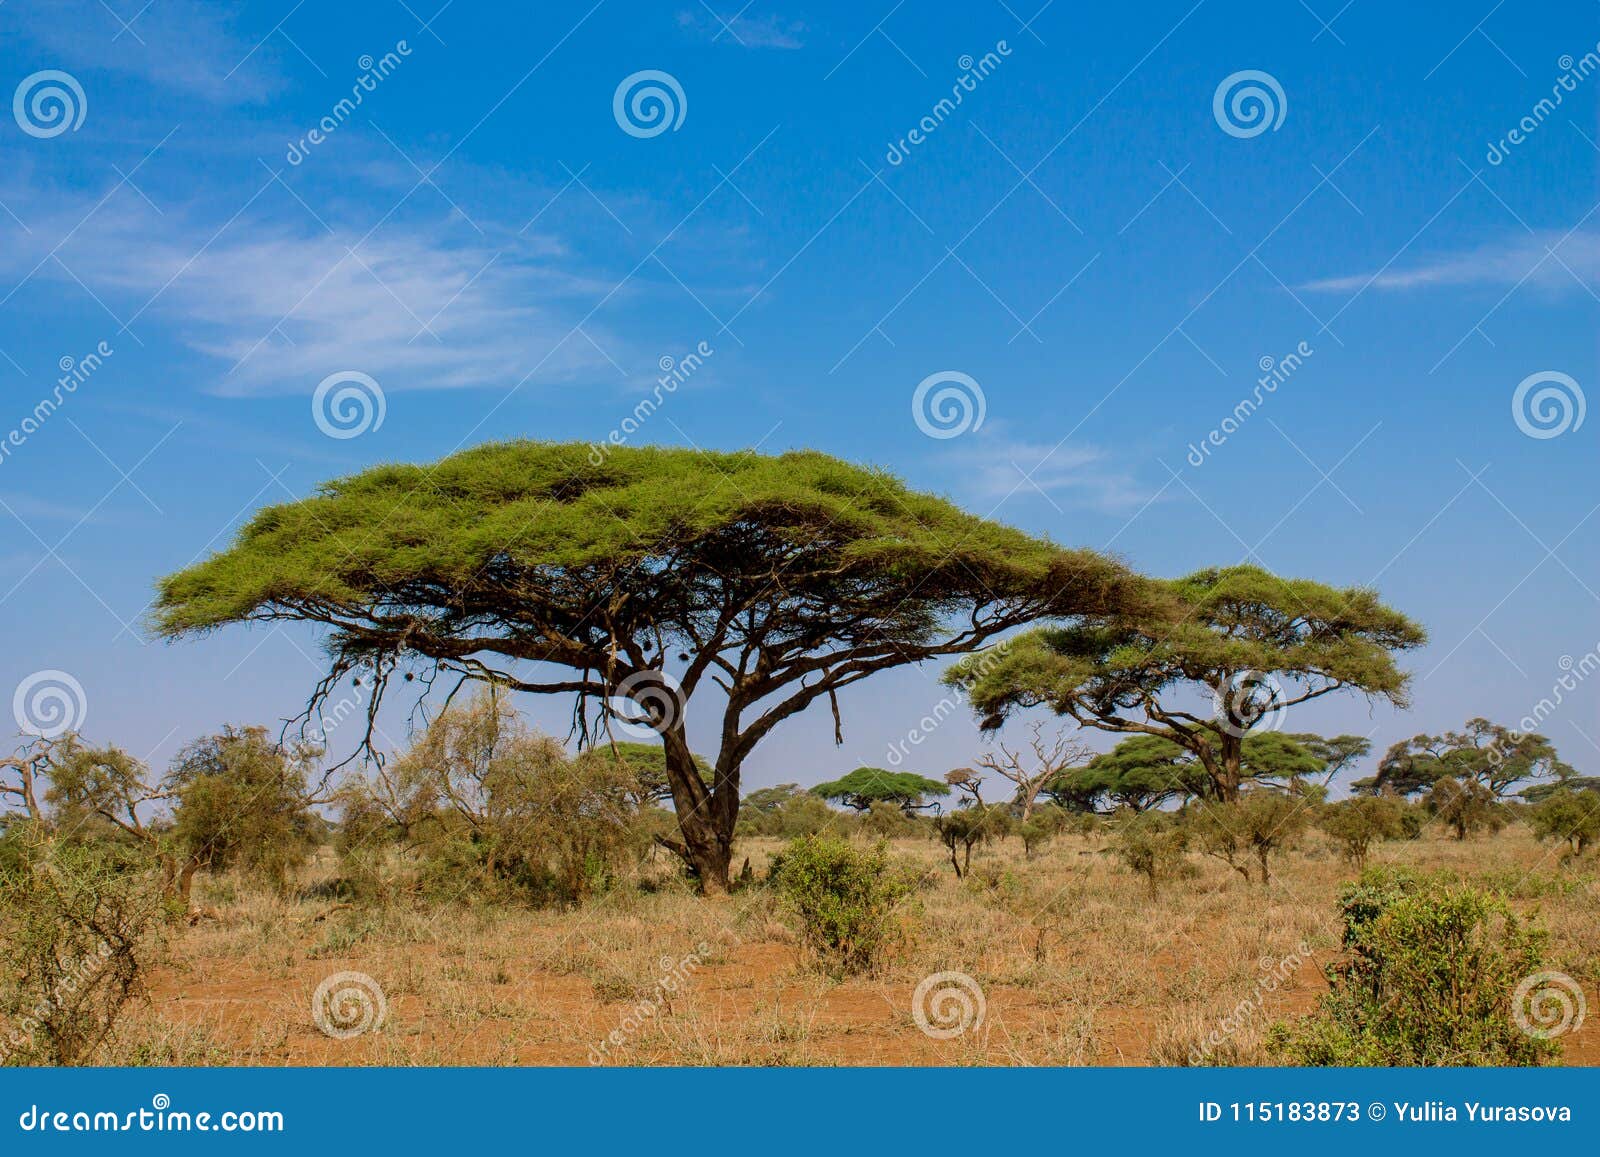 african acacia trees in savanna bush